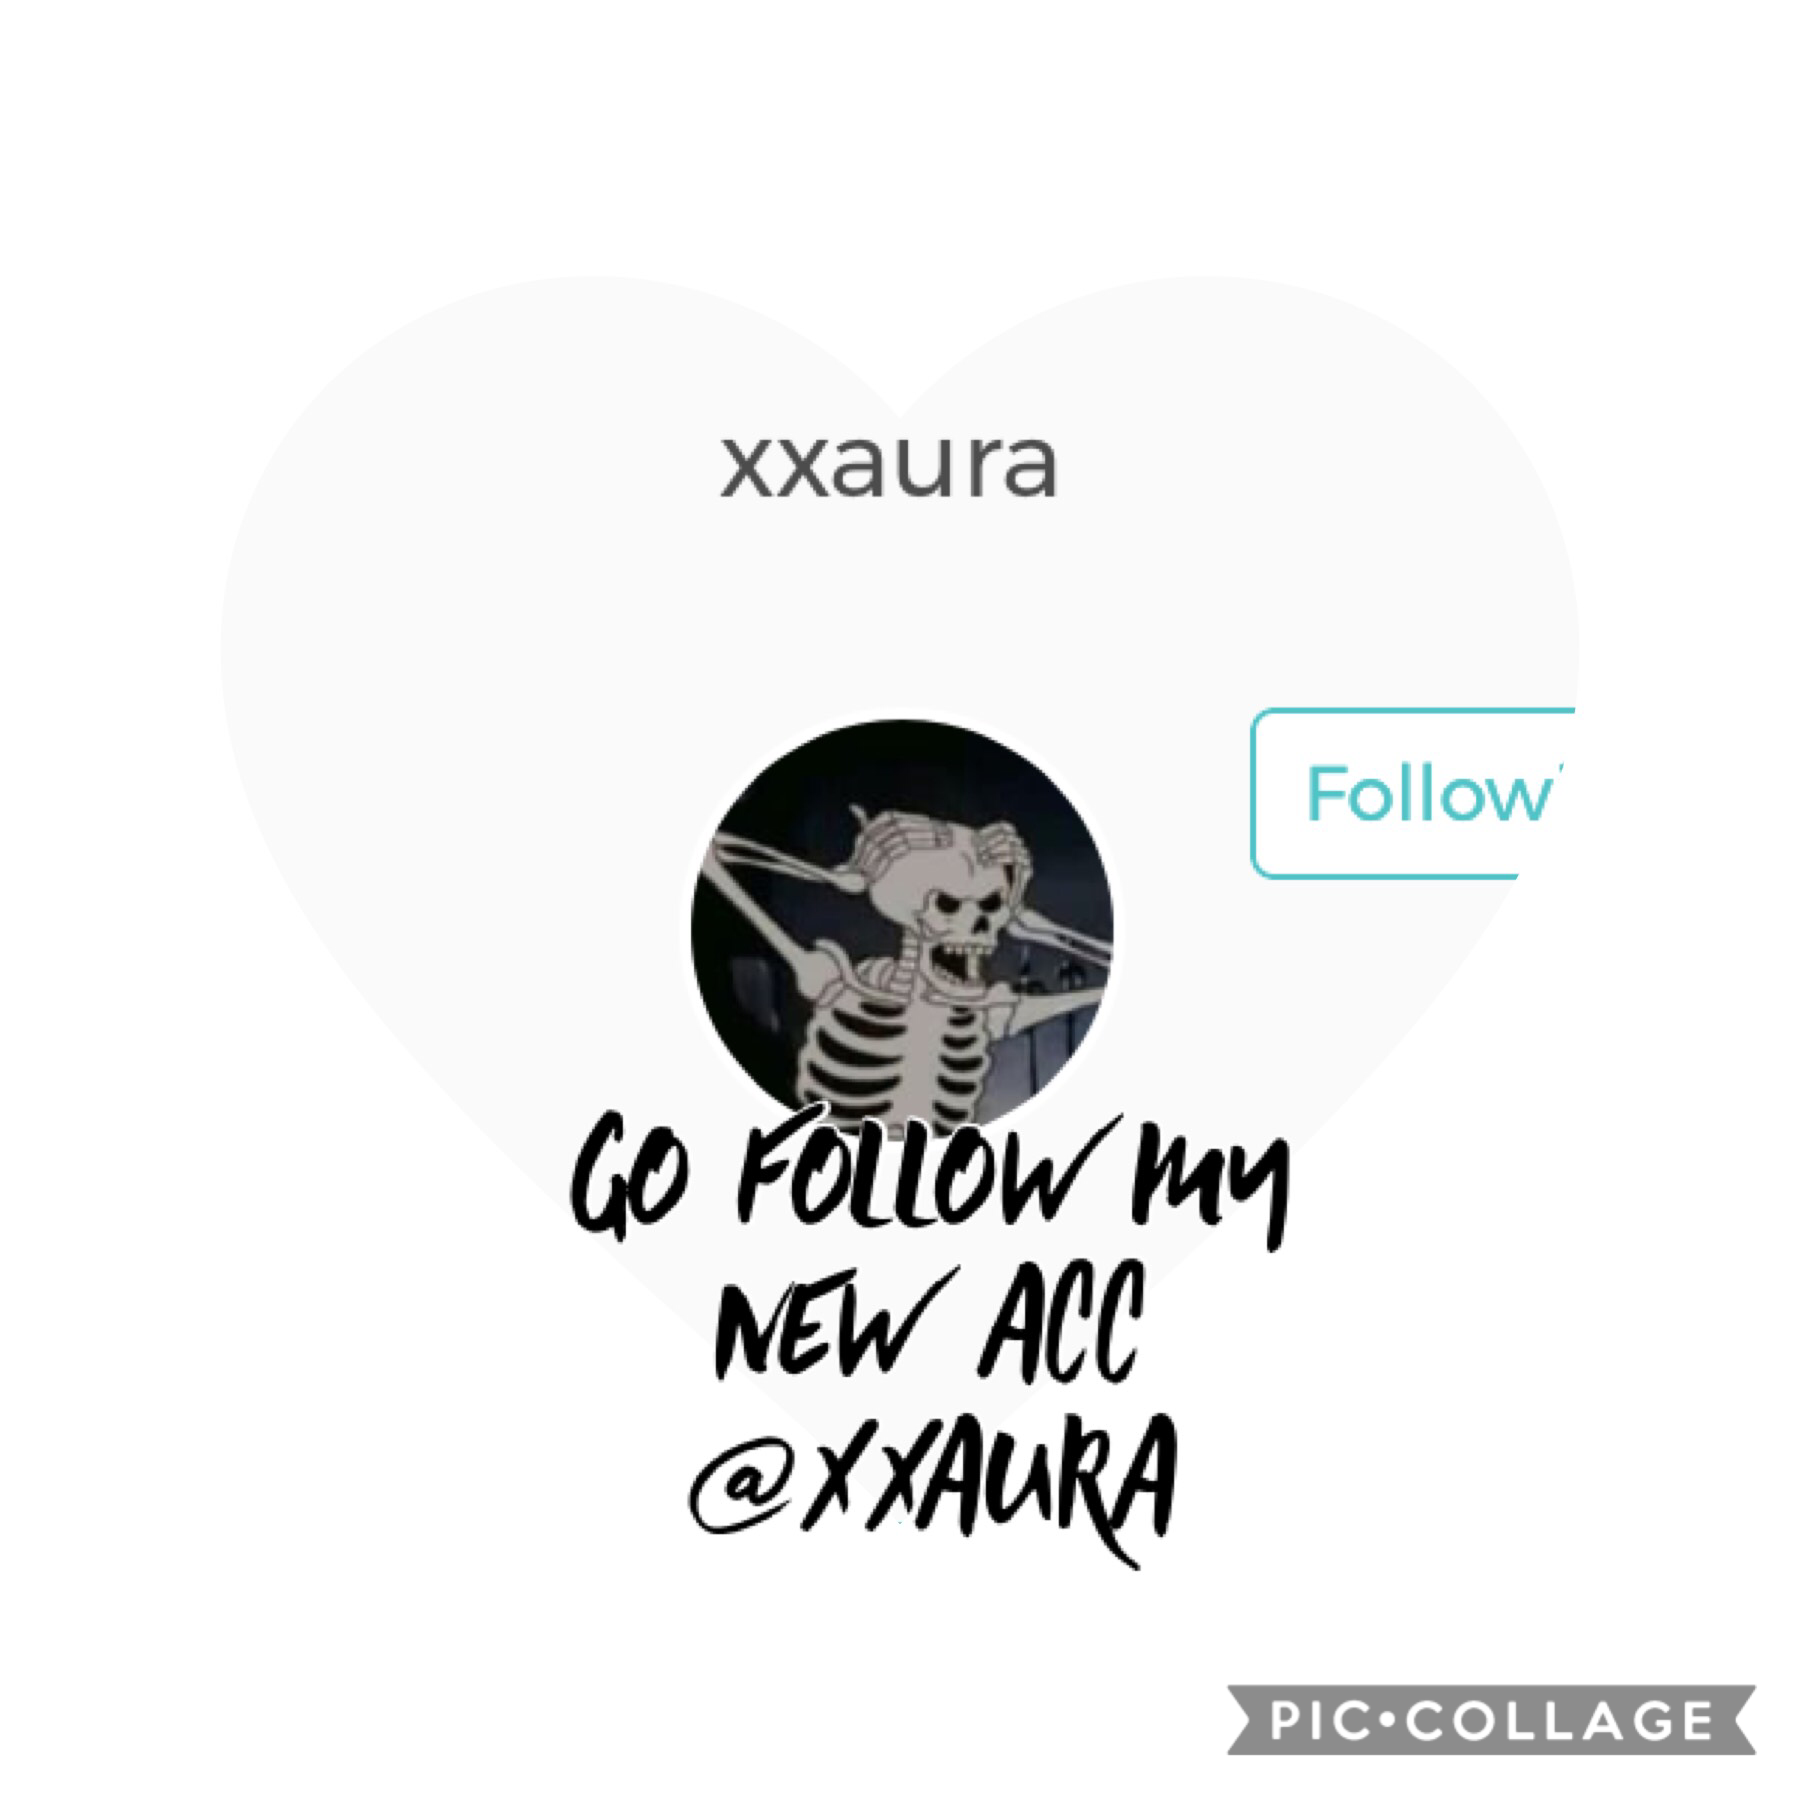 Go follow my new acc @xxaura it would mean a lot! 